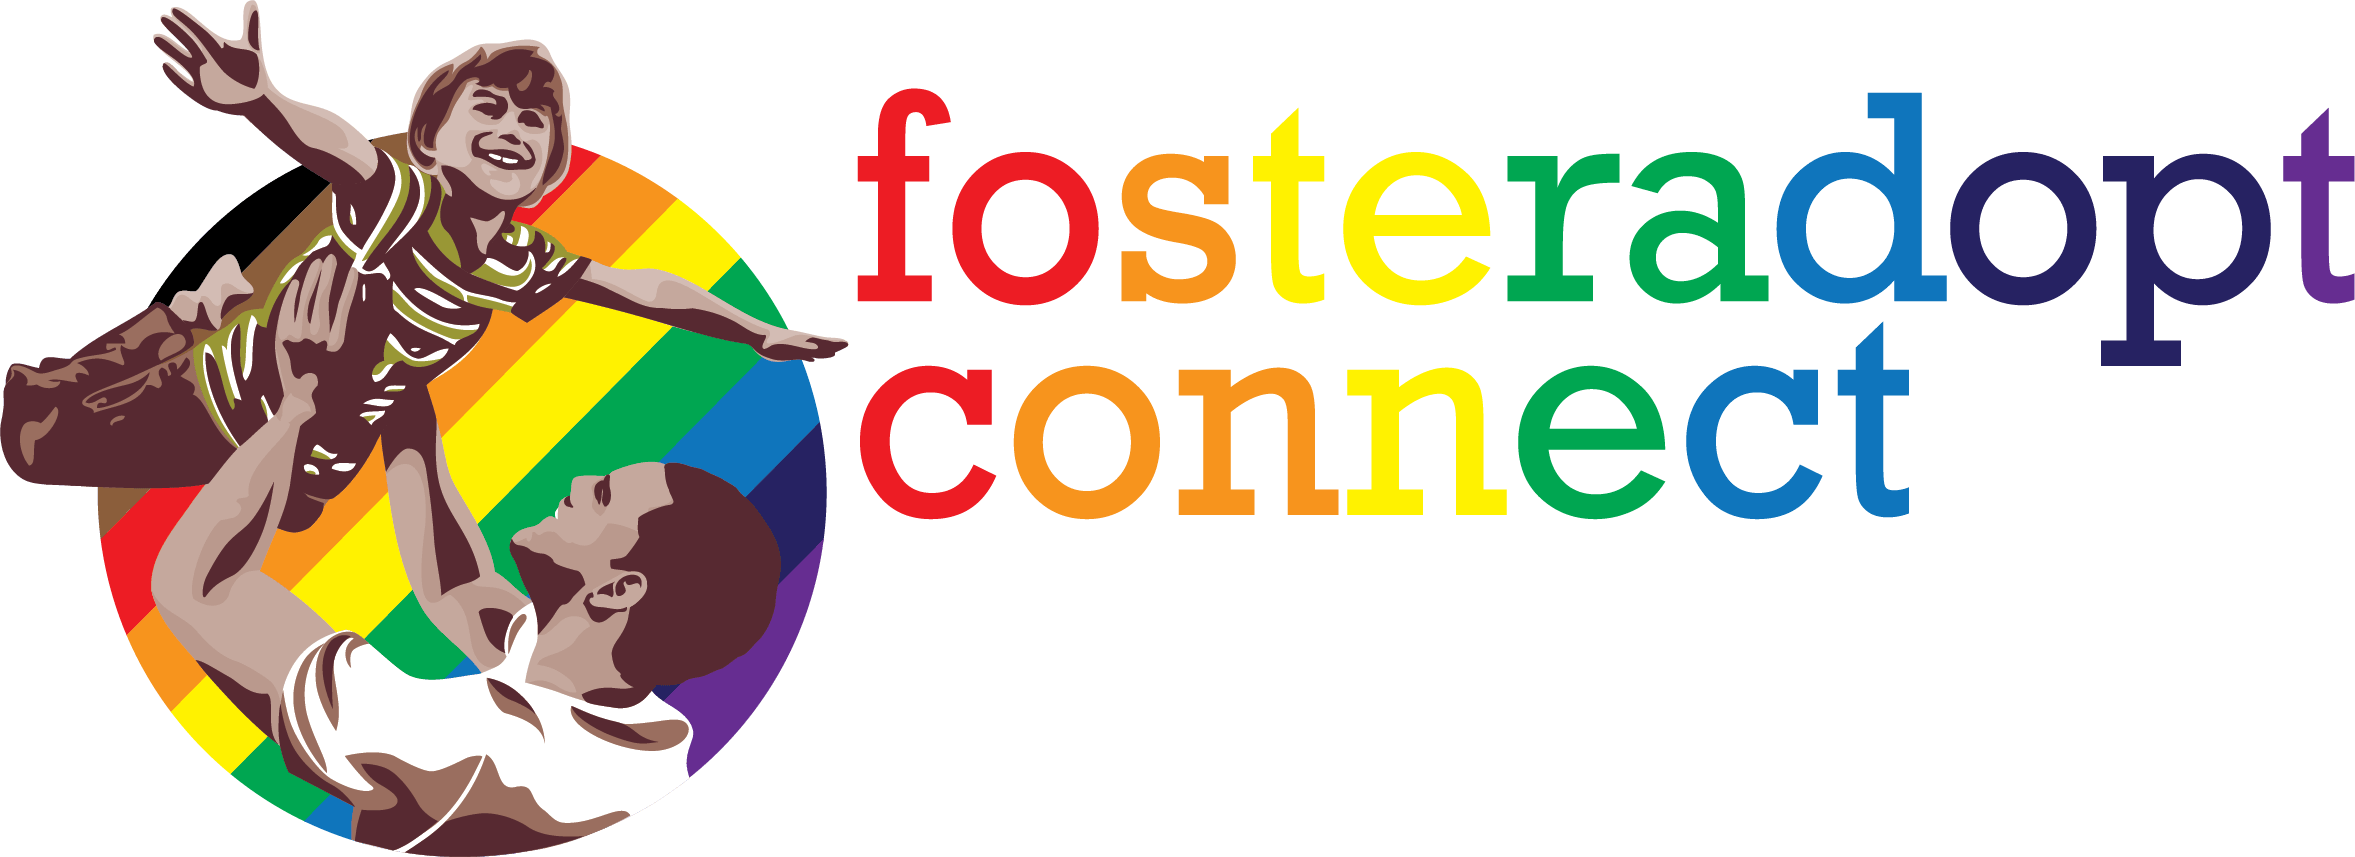 FosterAdopt Connect